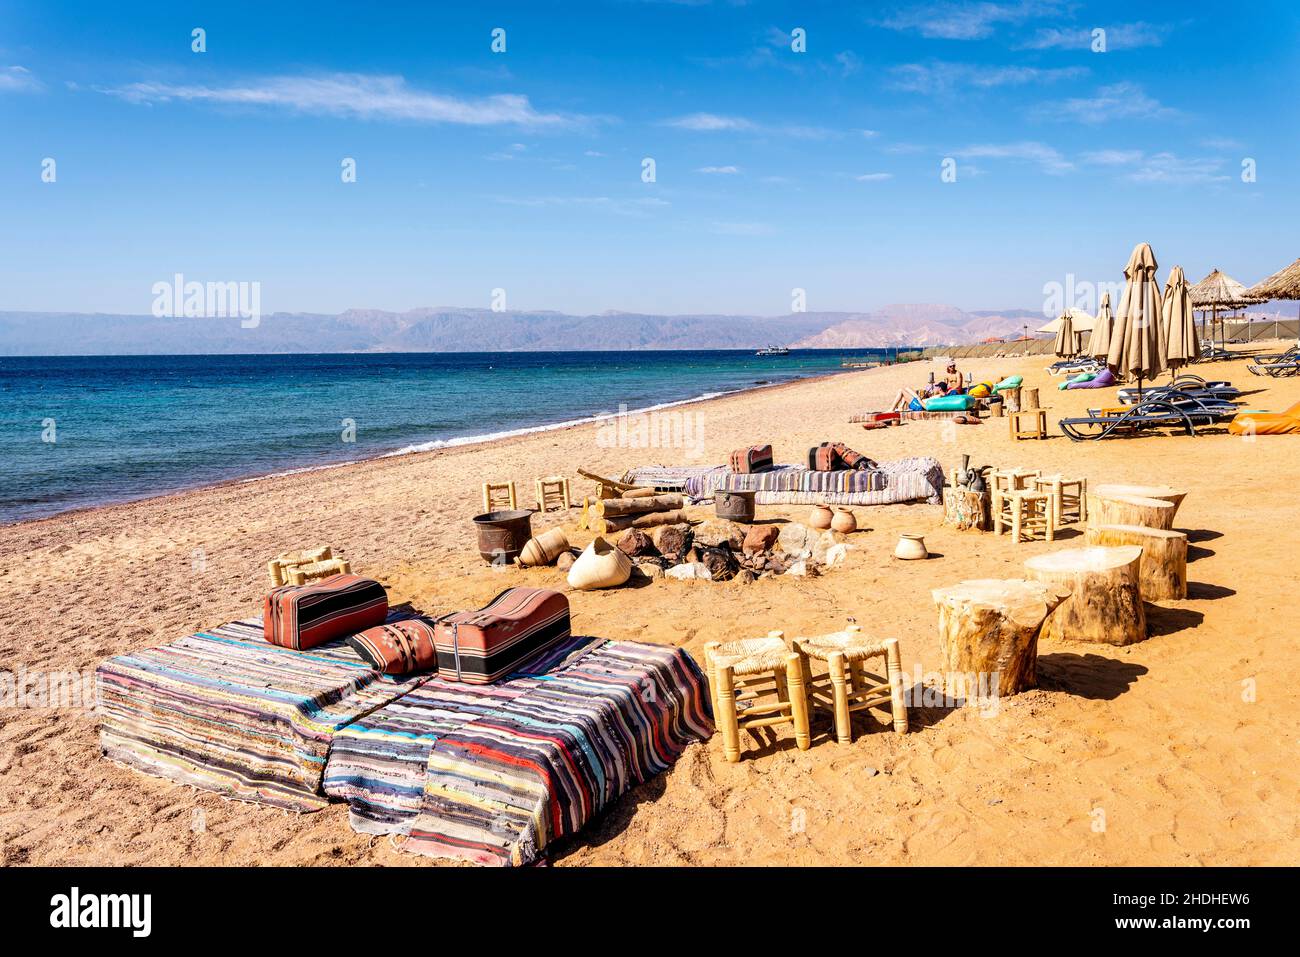 The Beach At The Berenice Beach Club, Aqaba, Aqaba Governorate, Jordan  Stock Photo - Alamy